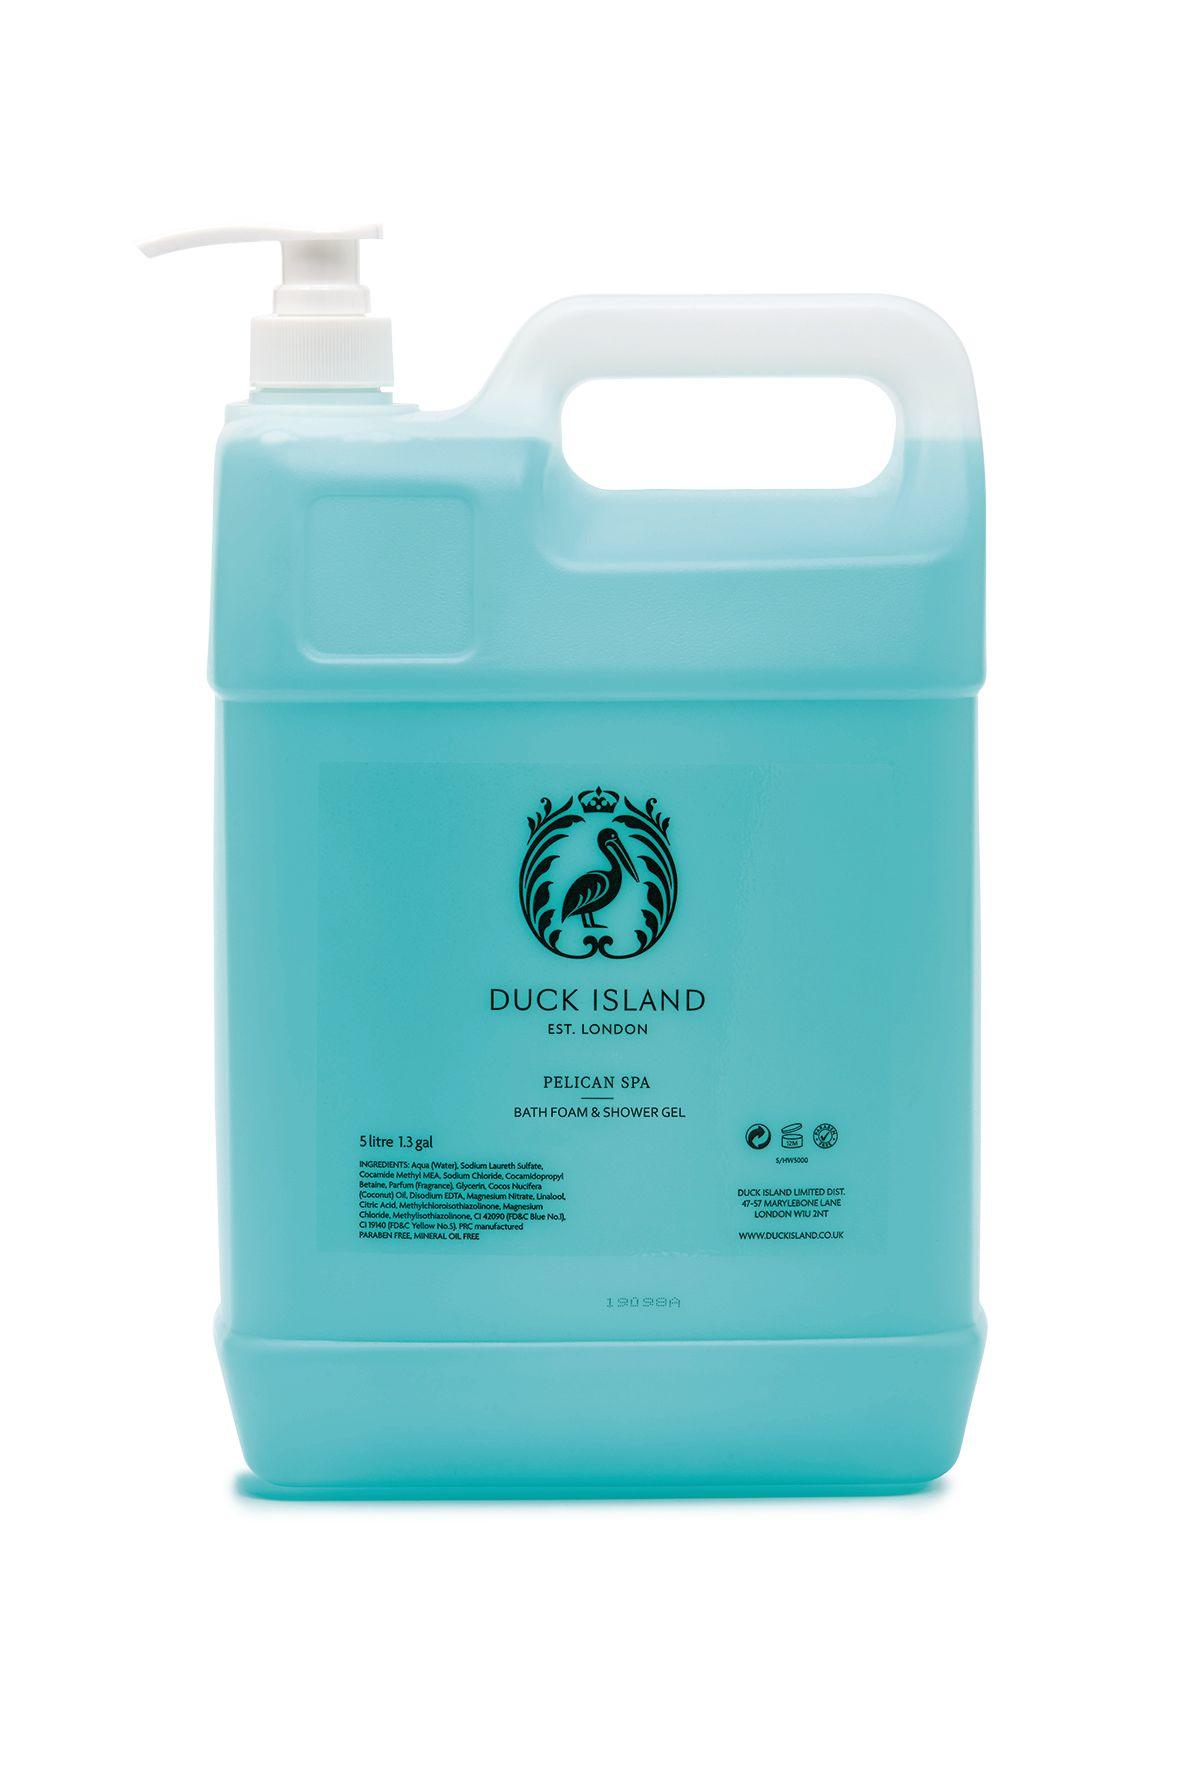 Duck Island 5 litre Pelican Spa bath foam & shower gel dispenser